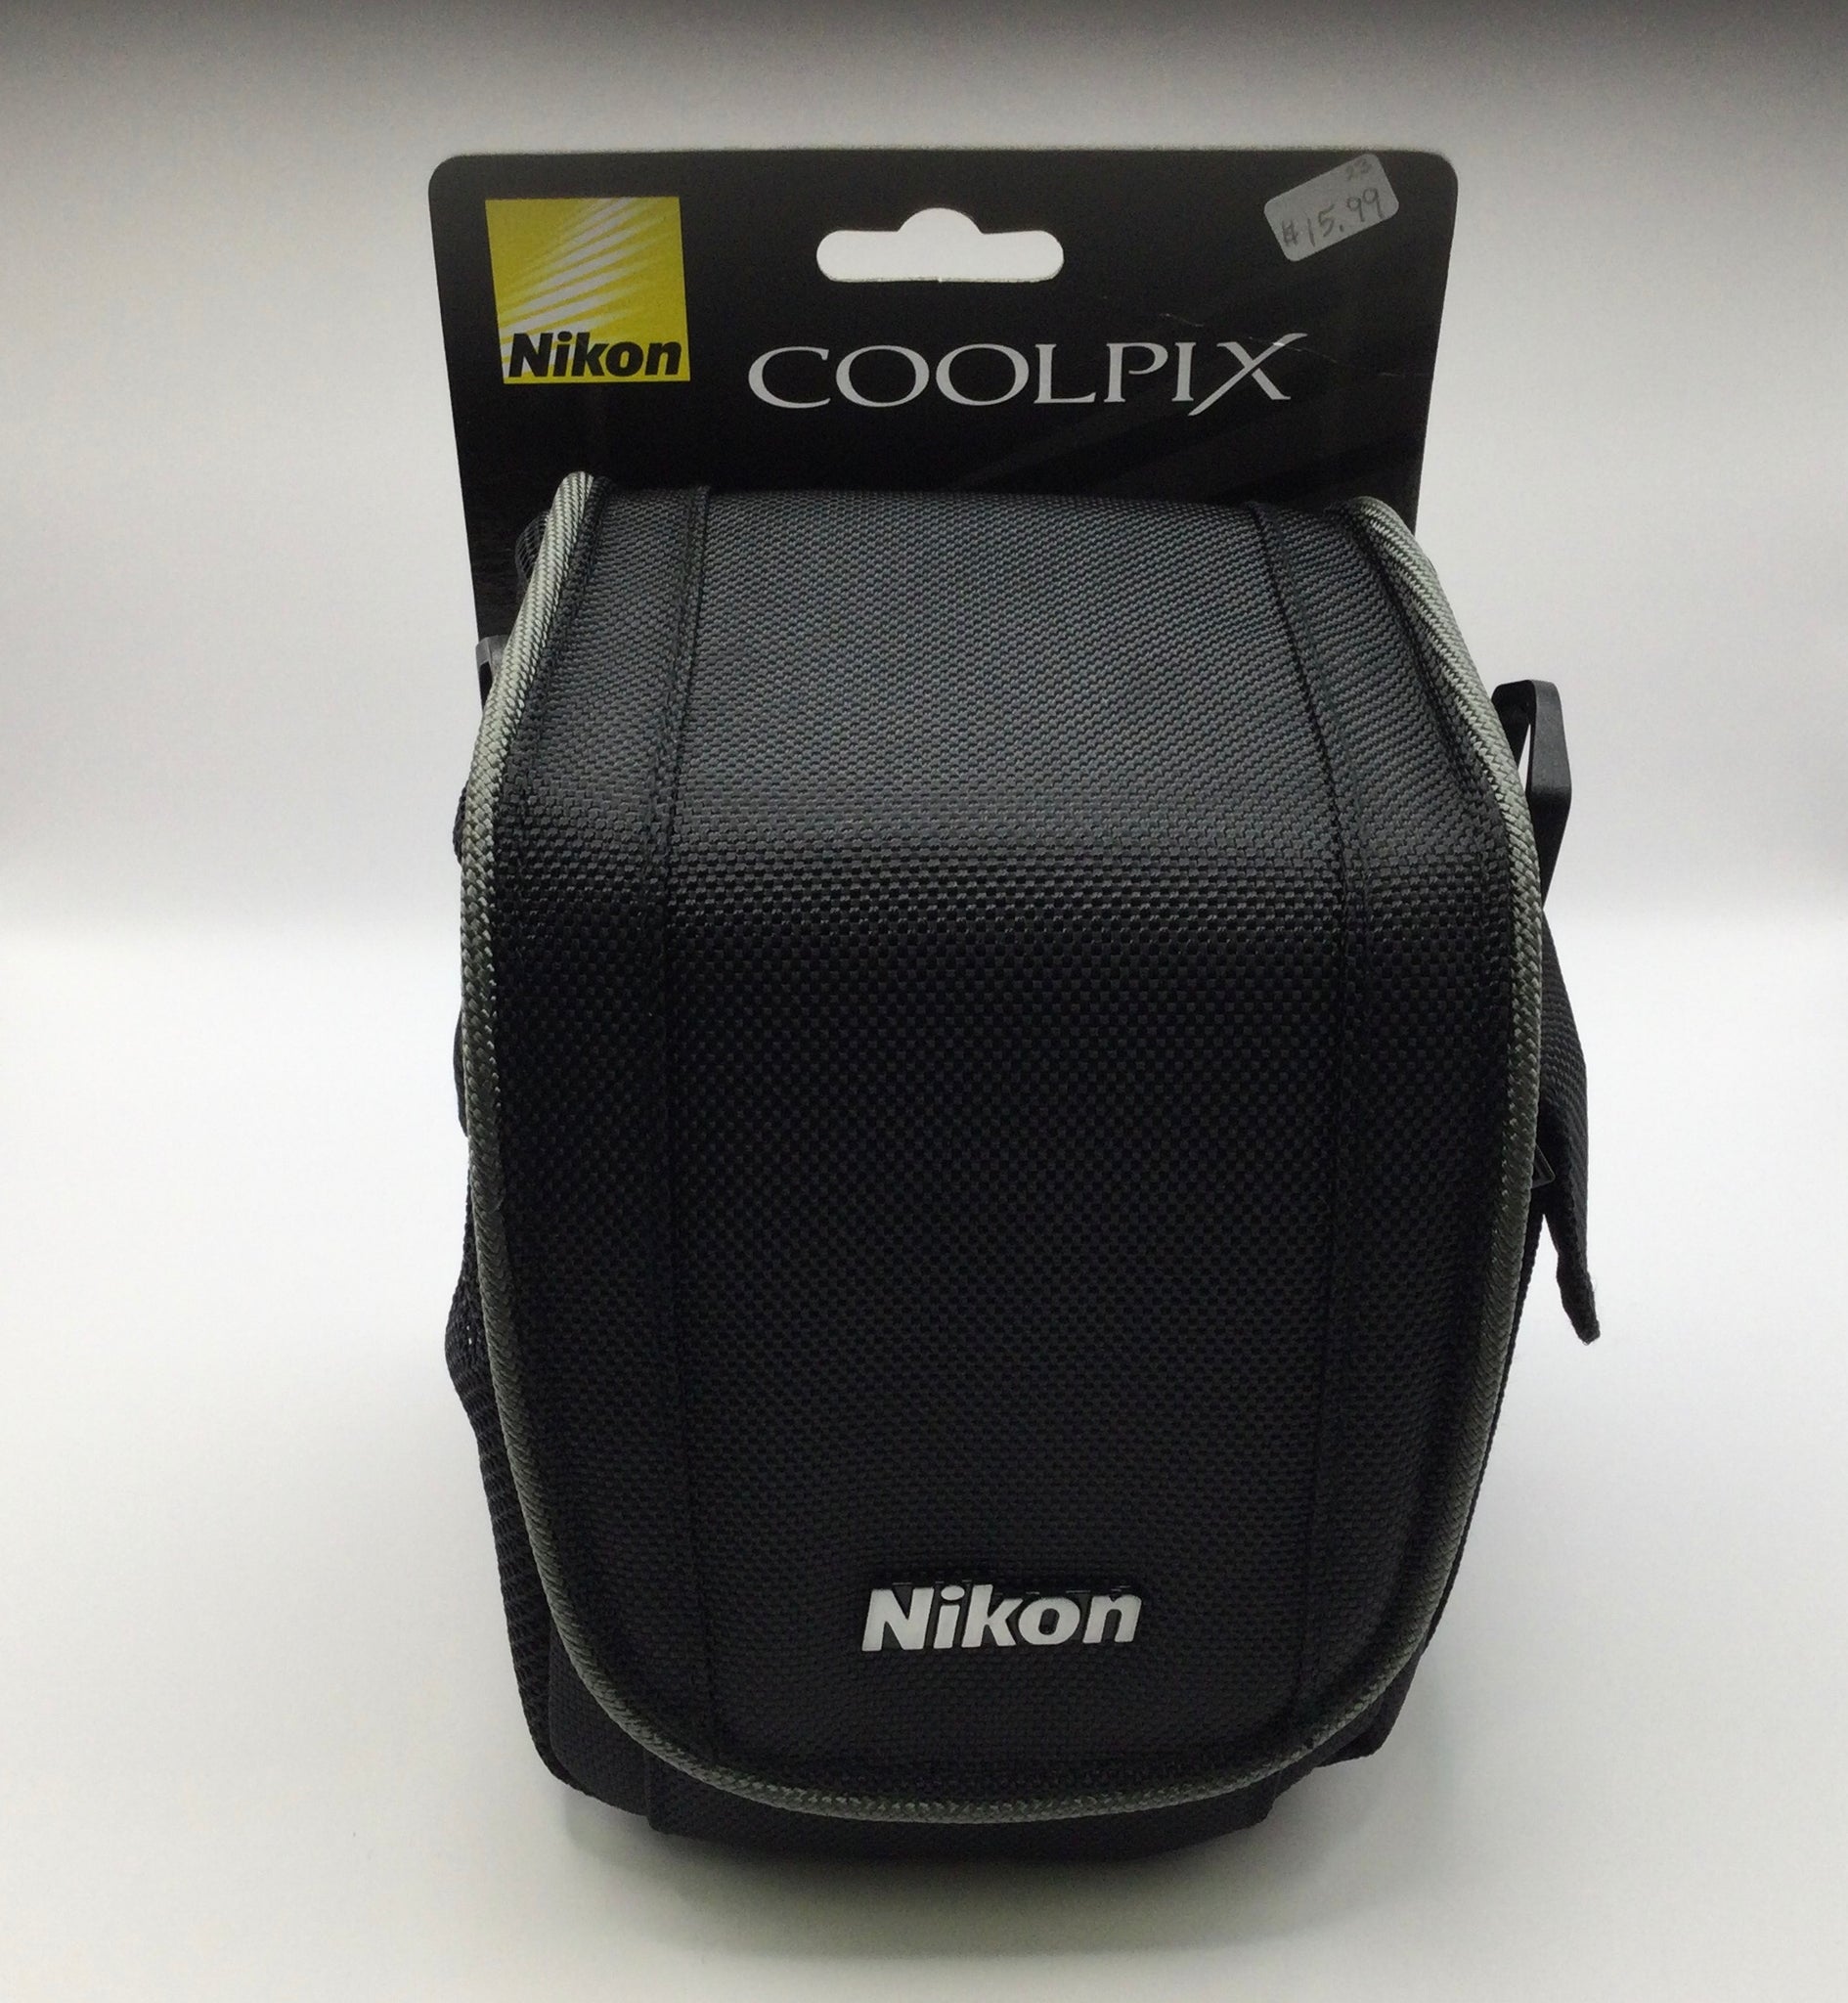 Nikon CoolPix travel bag